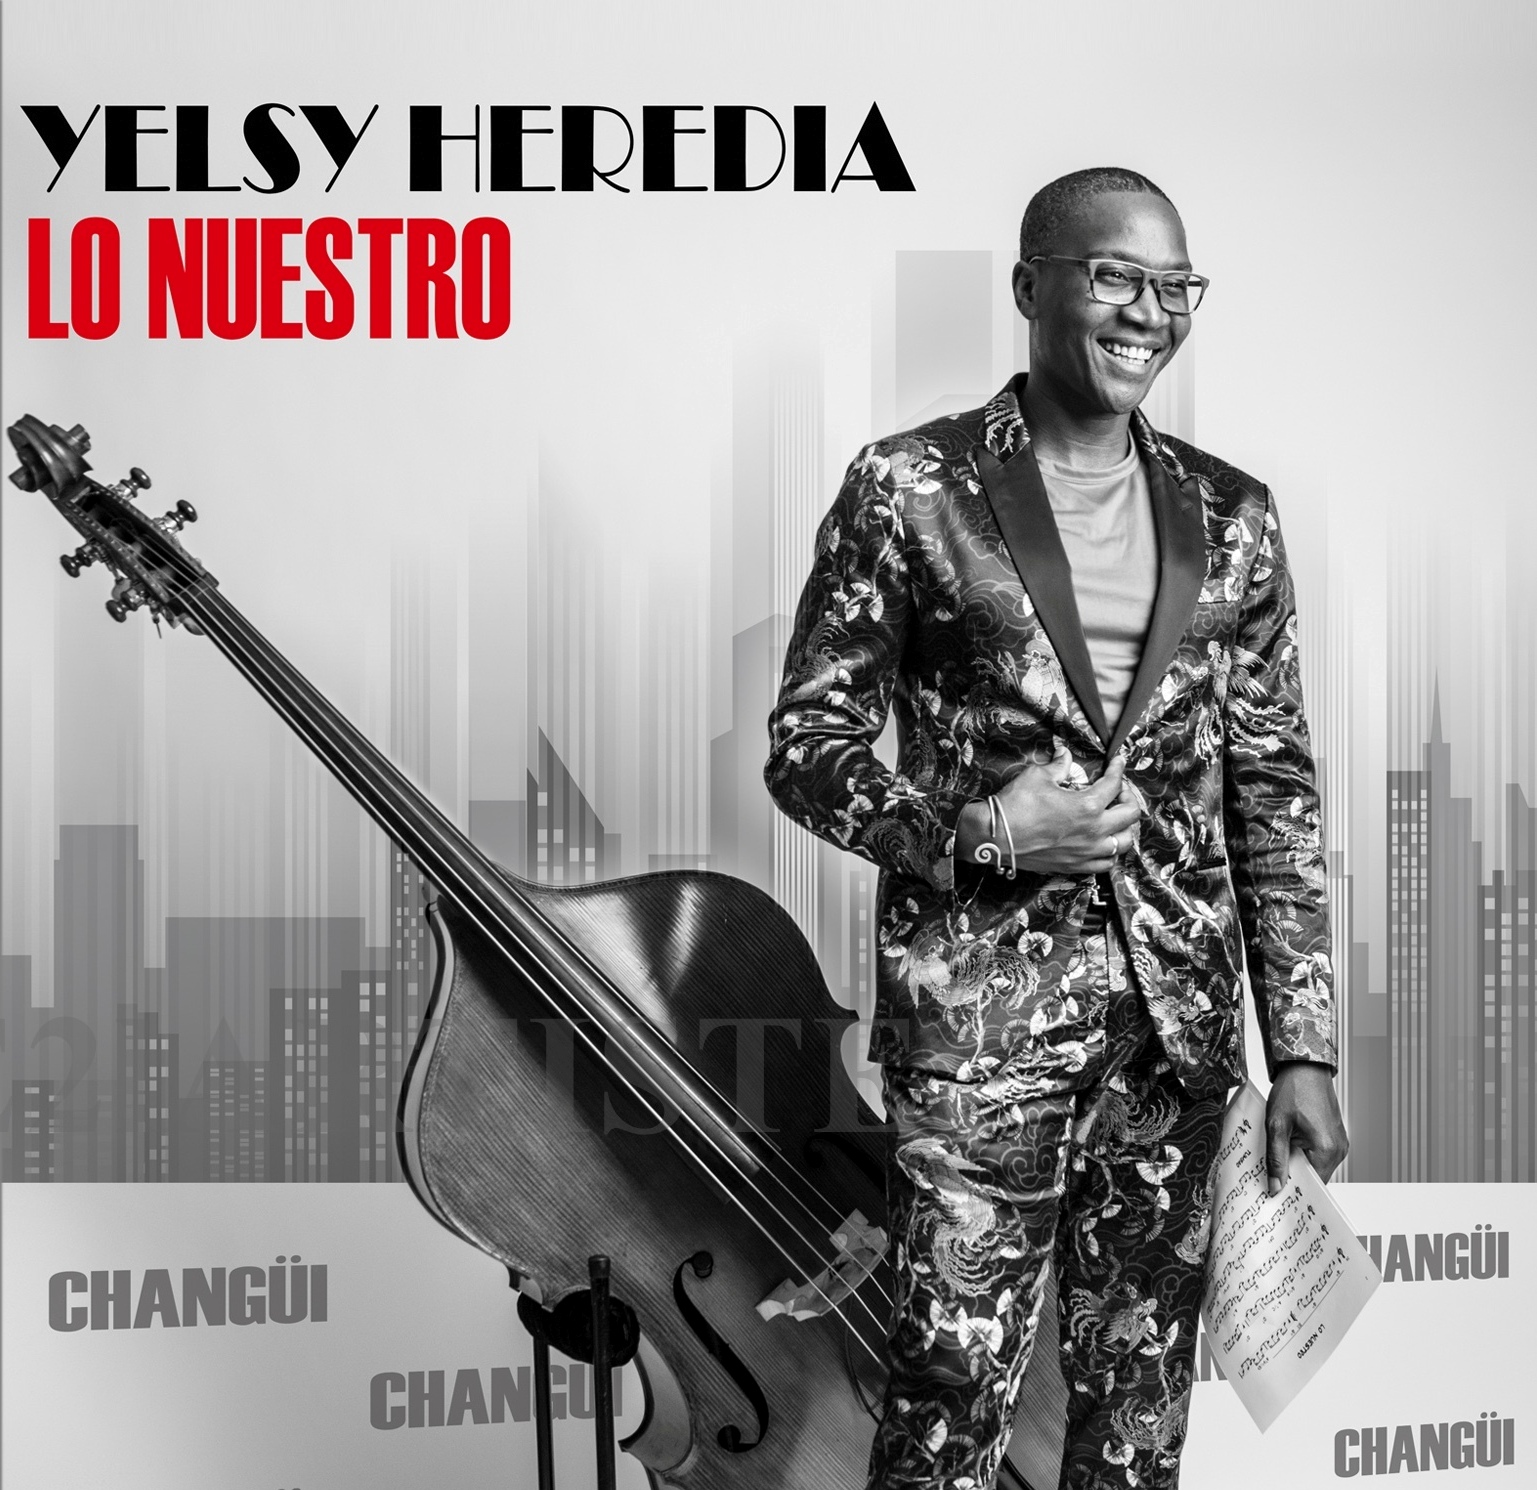 Promenade dans les genres musicaux afro-cubains via “LO NUESTRO” du contrebassiste Yelsy Heredia.